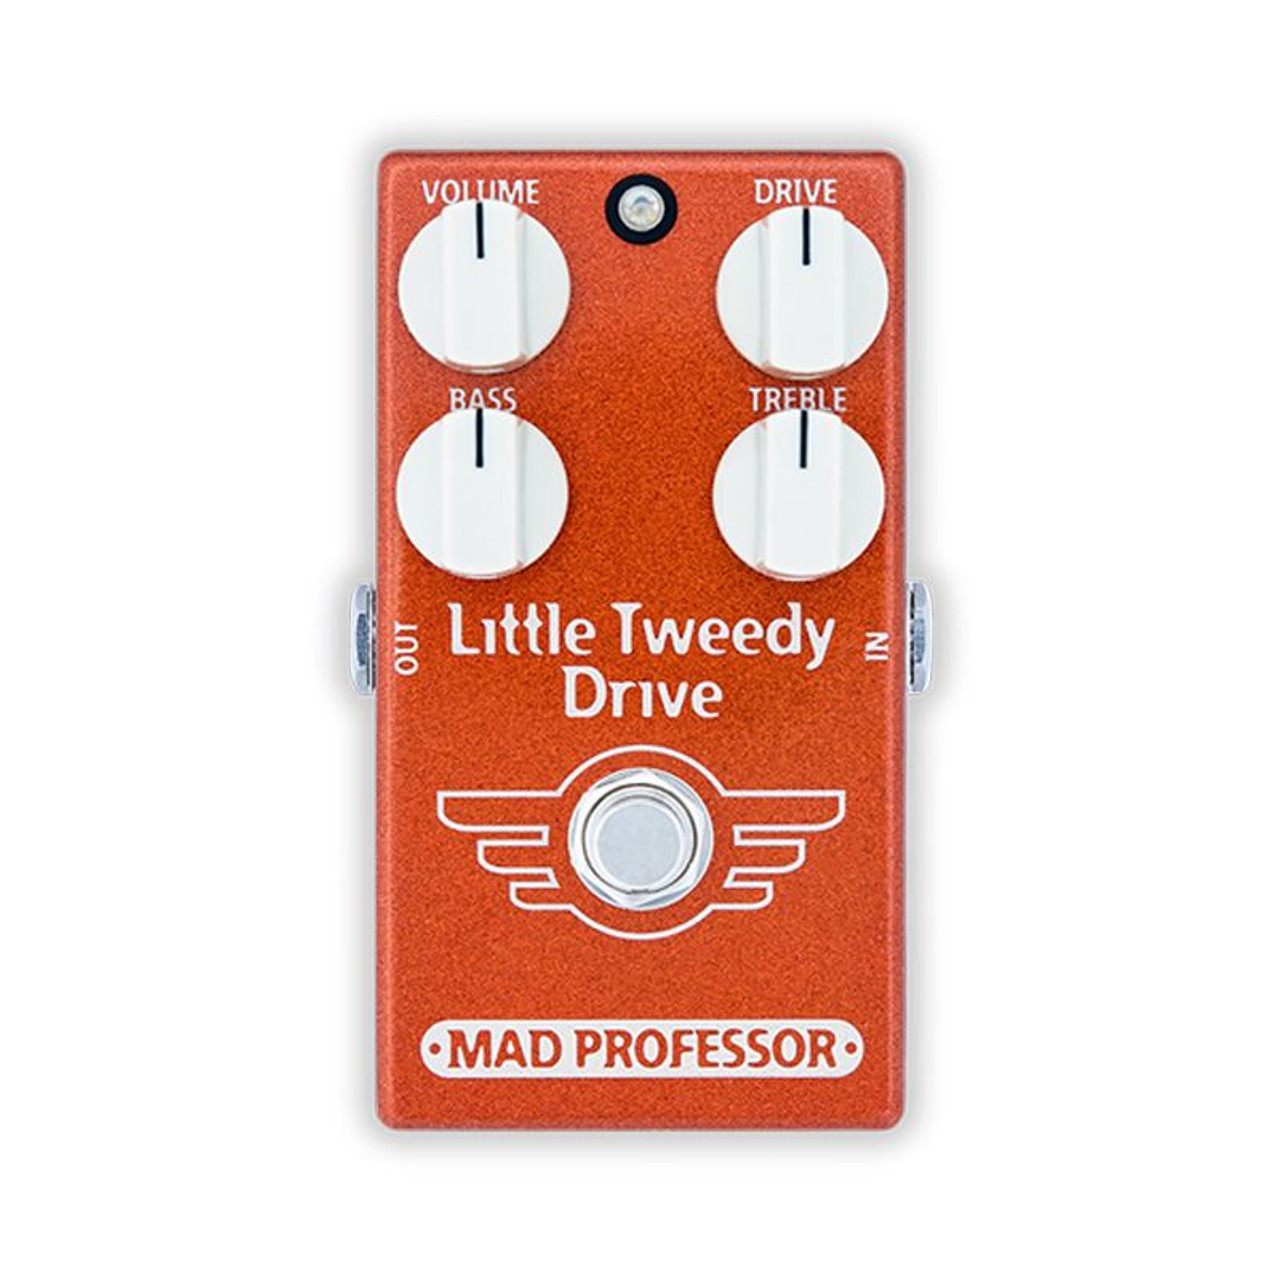 Mad Professor Little Tweedy Drive Overdrive pedal